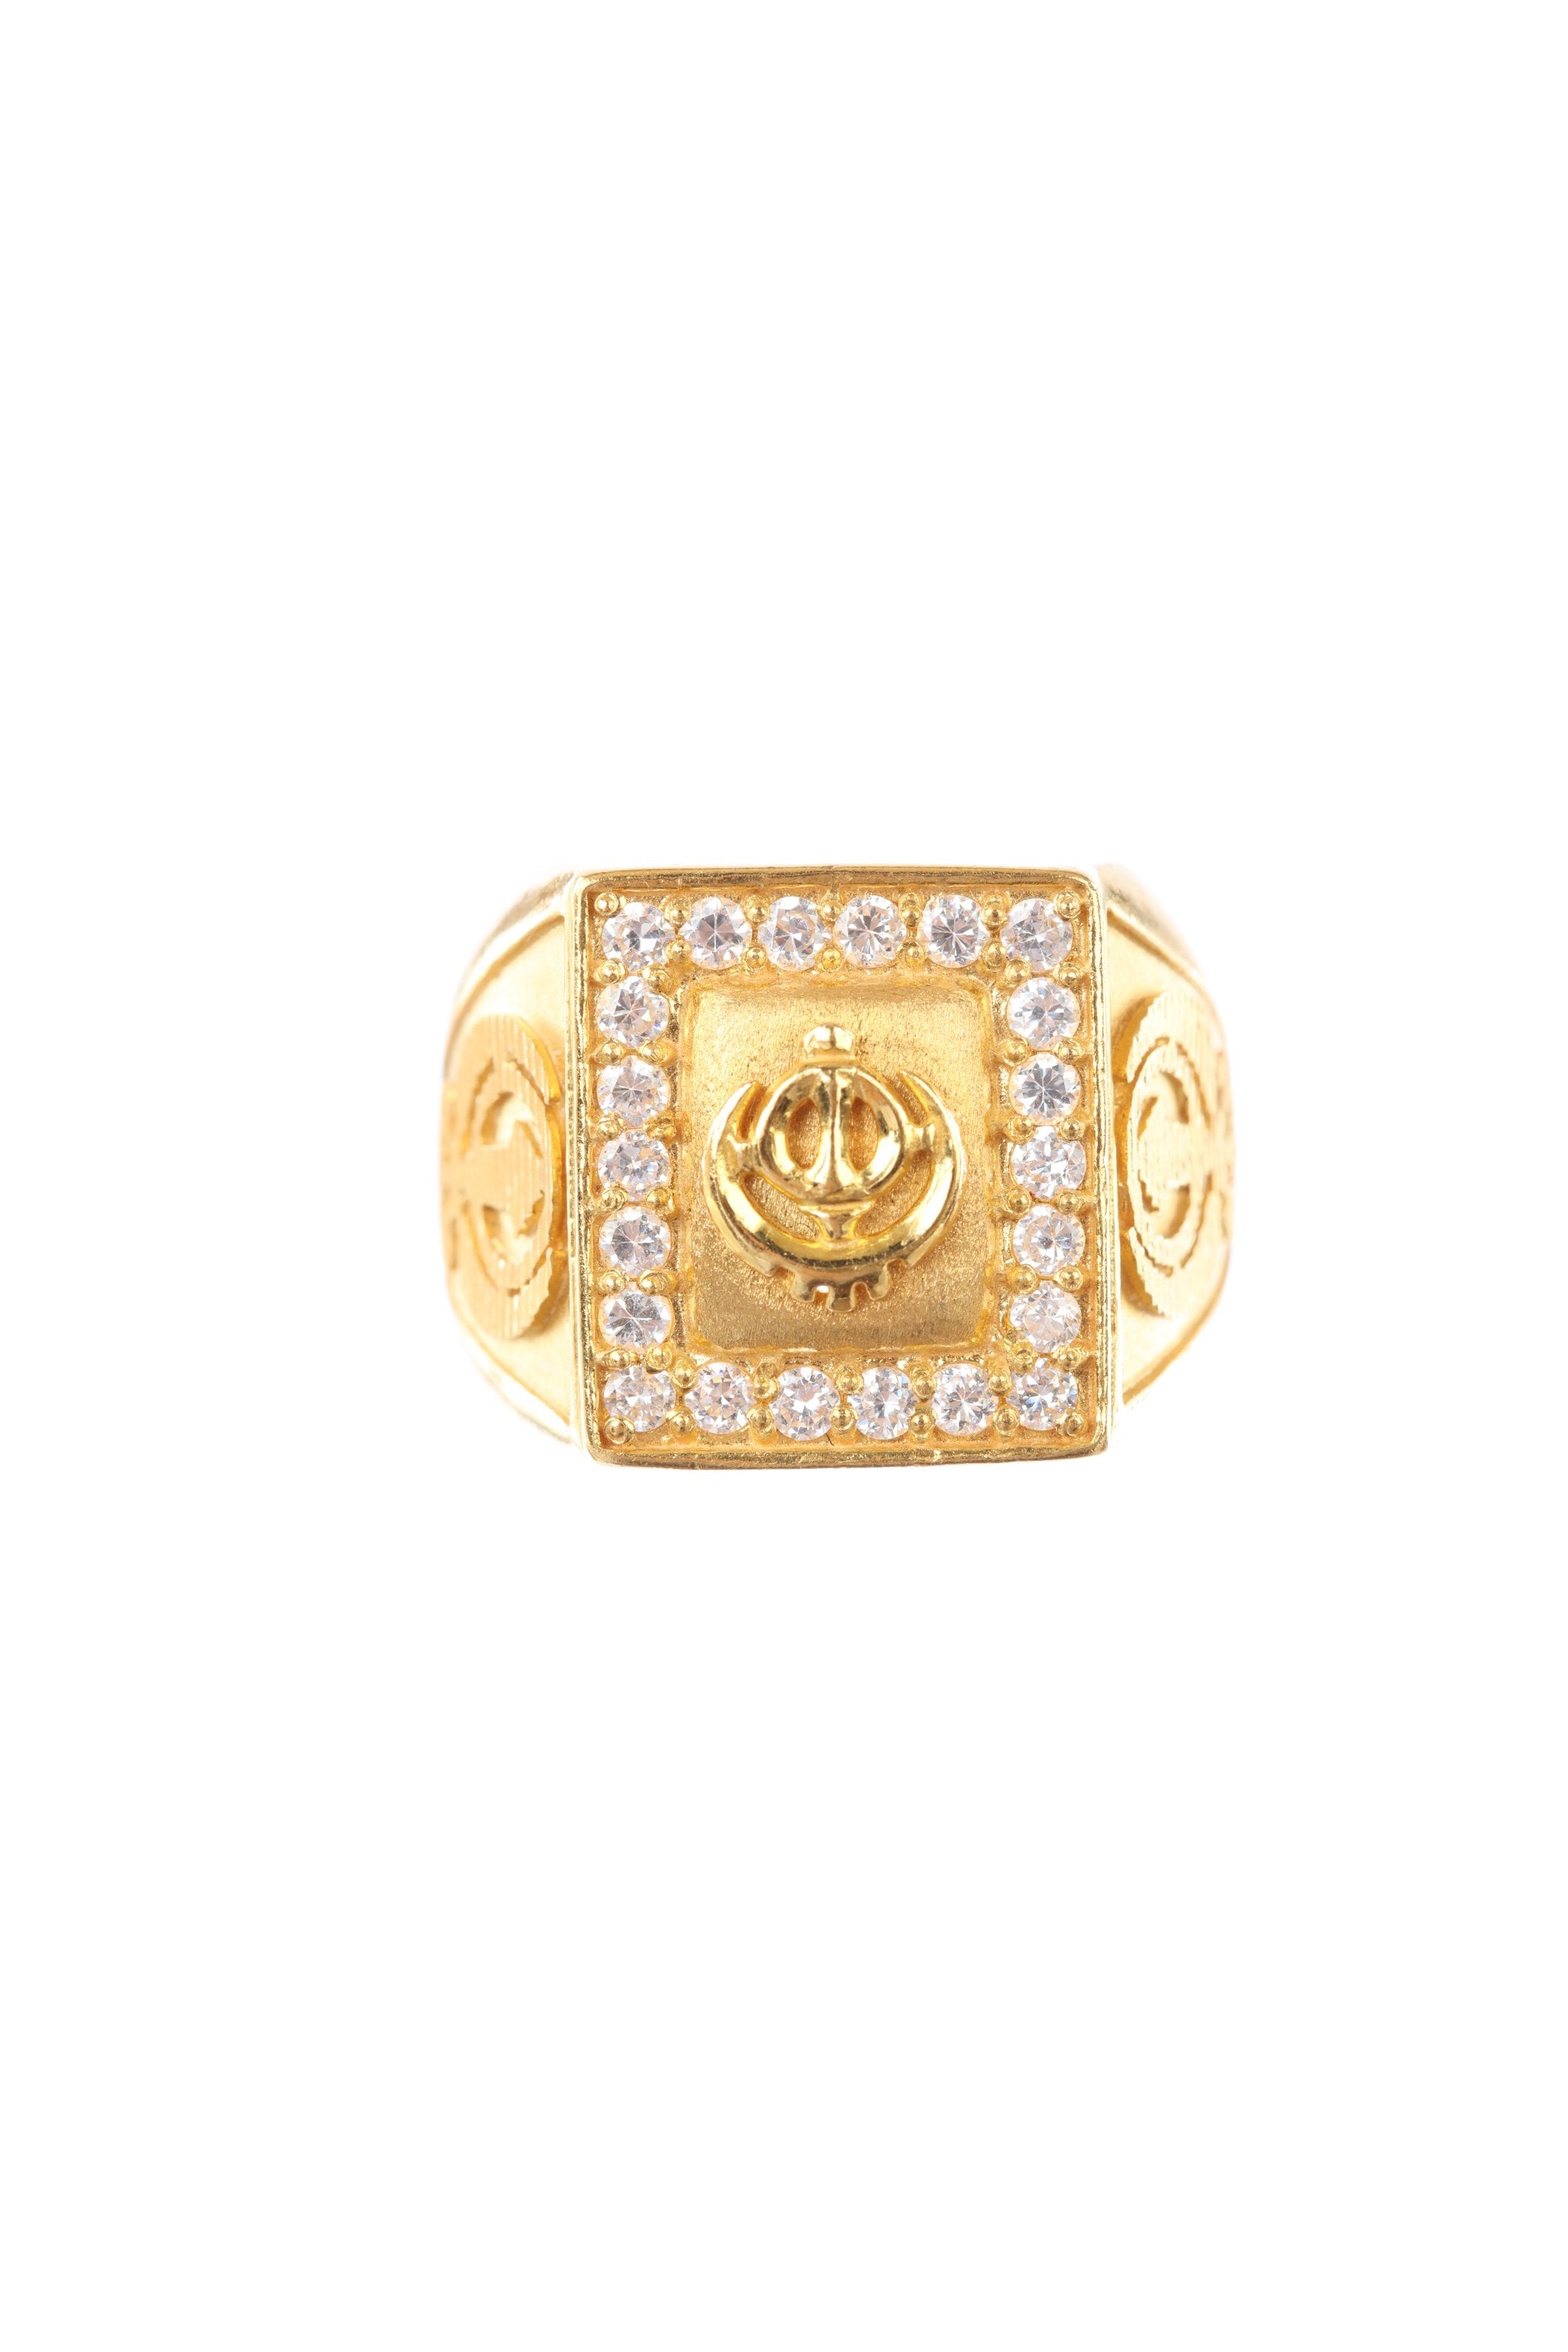 Khanda diamond ring 14 karat Hallmarked Gold and Certified Diamond  Jewellery. Visit the store today- 164-A, Major Sudesh Kumar Marg, LI... |  Instagram